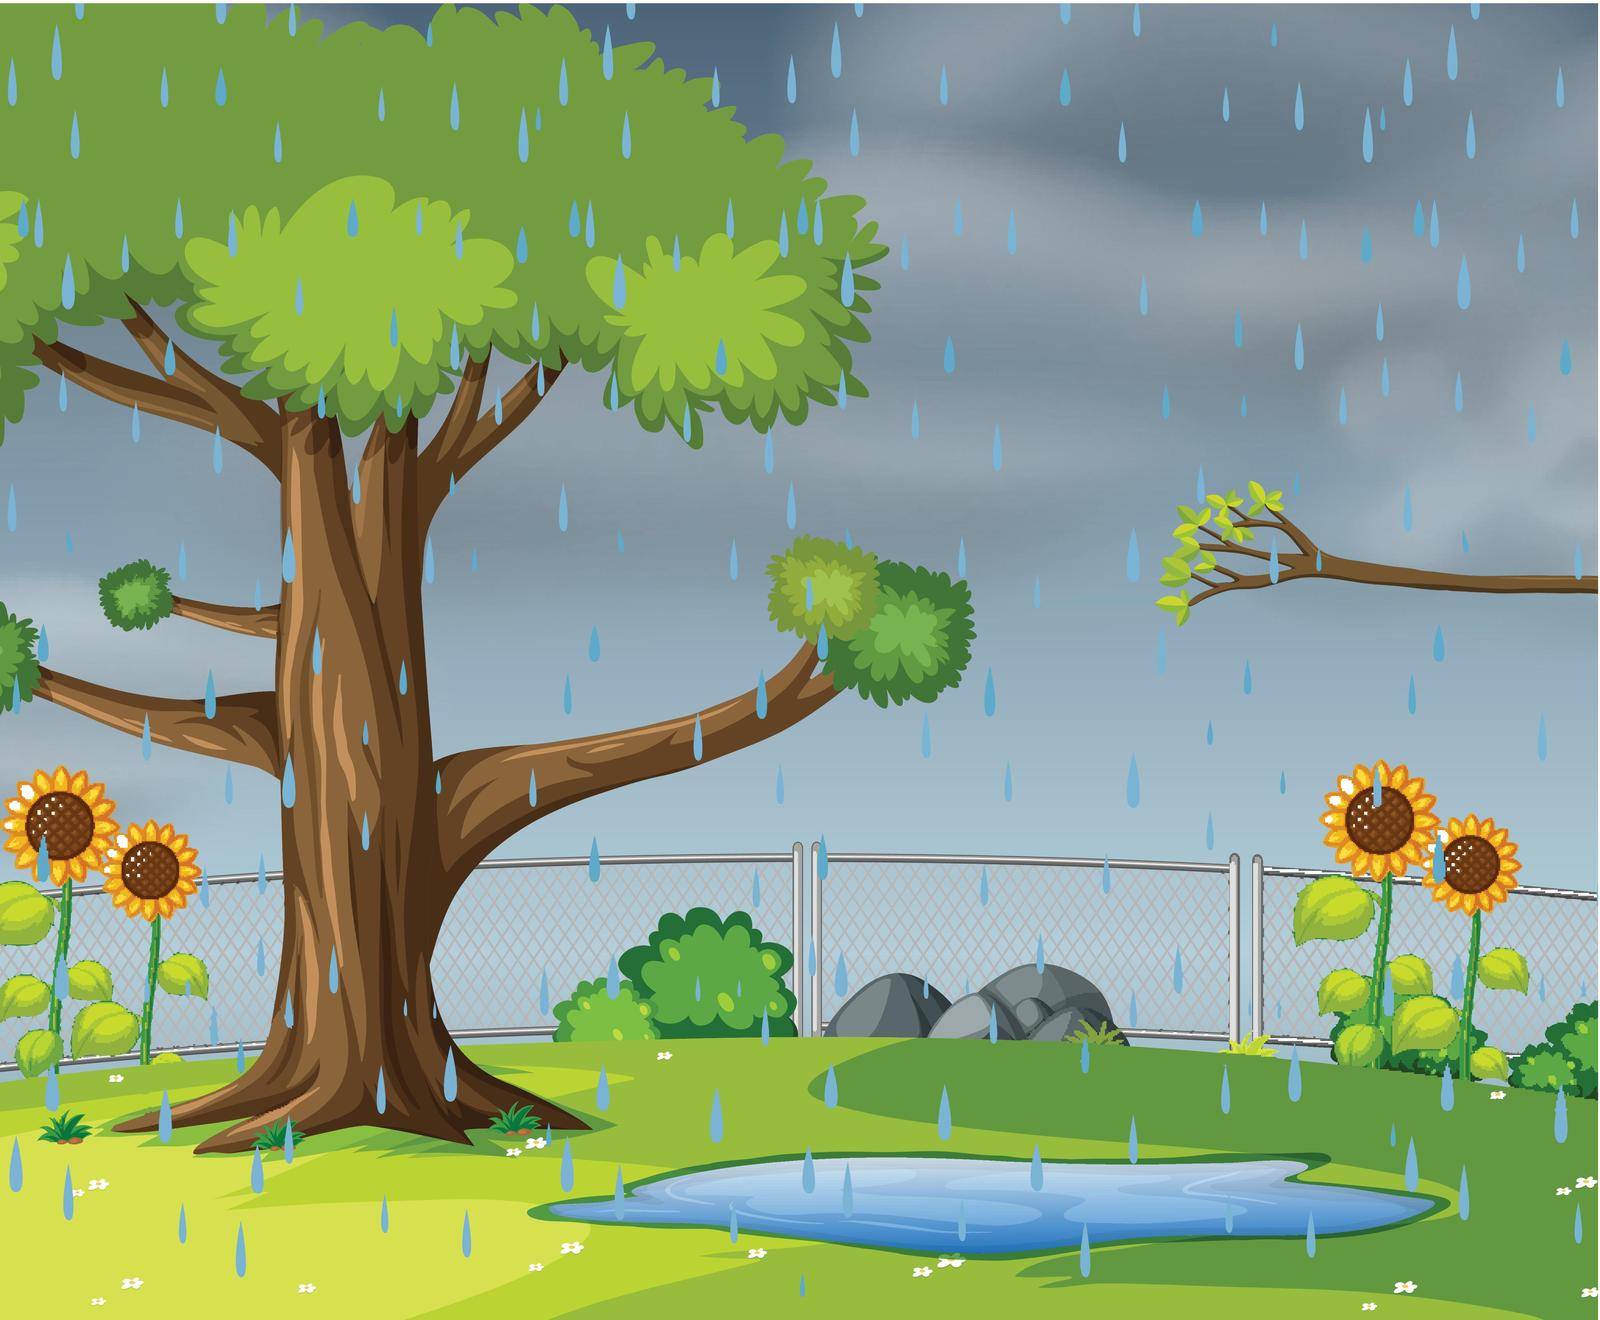 Raining in the garden illustration